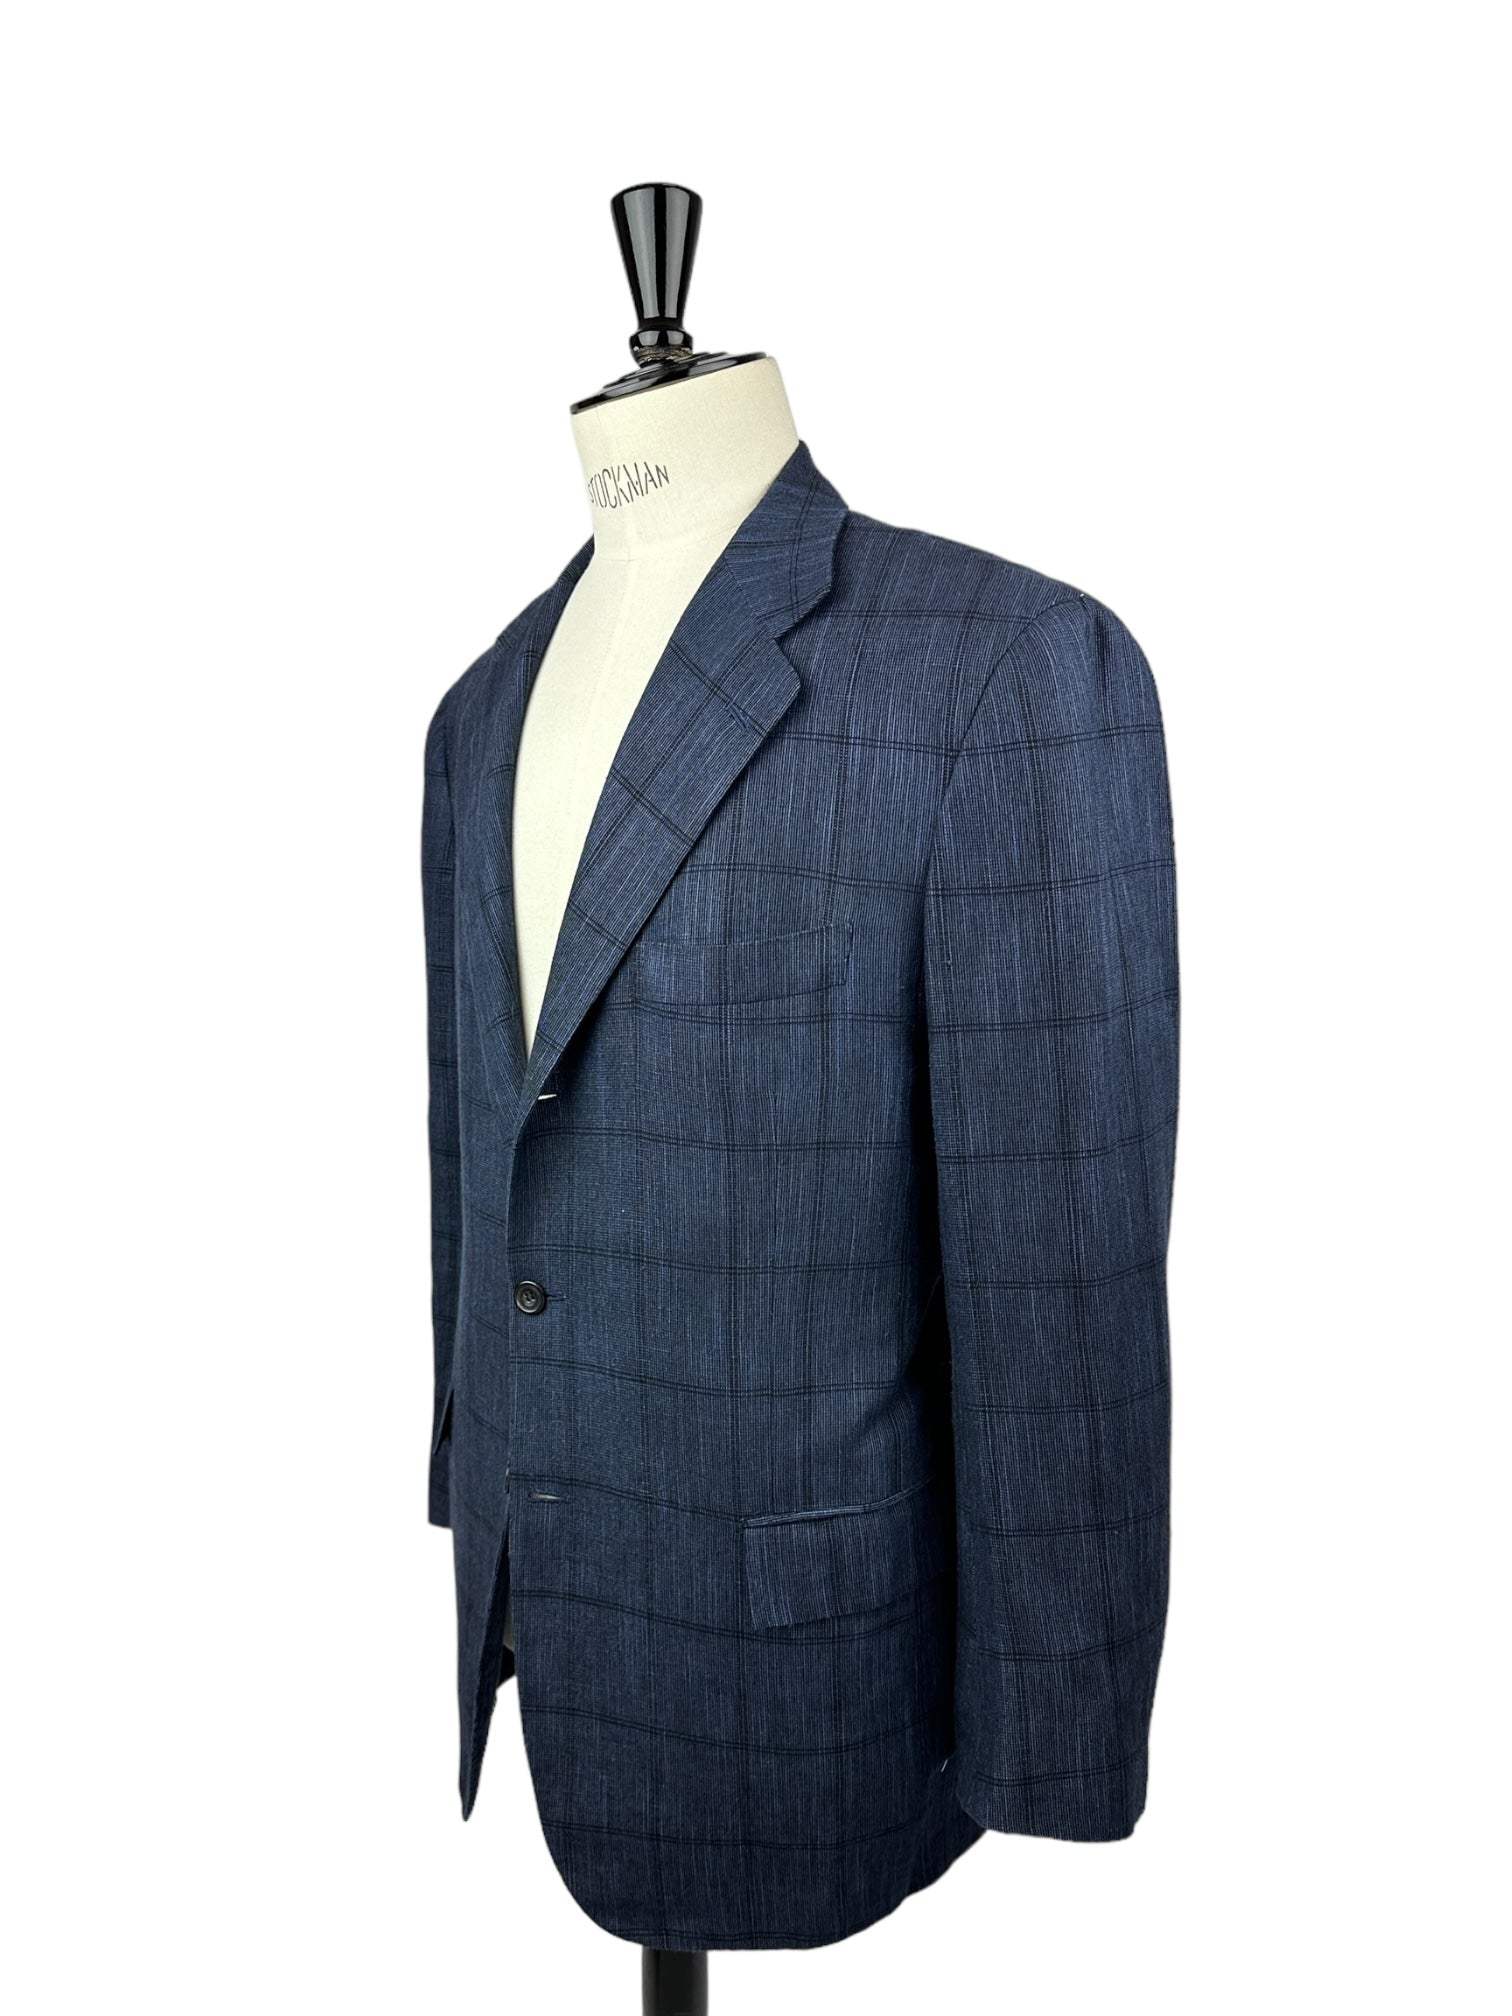 Kiton Blue Cashmere & Linen Windowpane Jacket